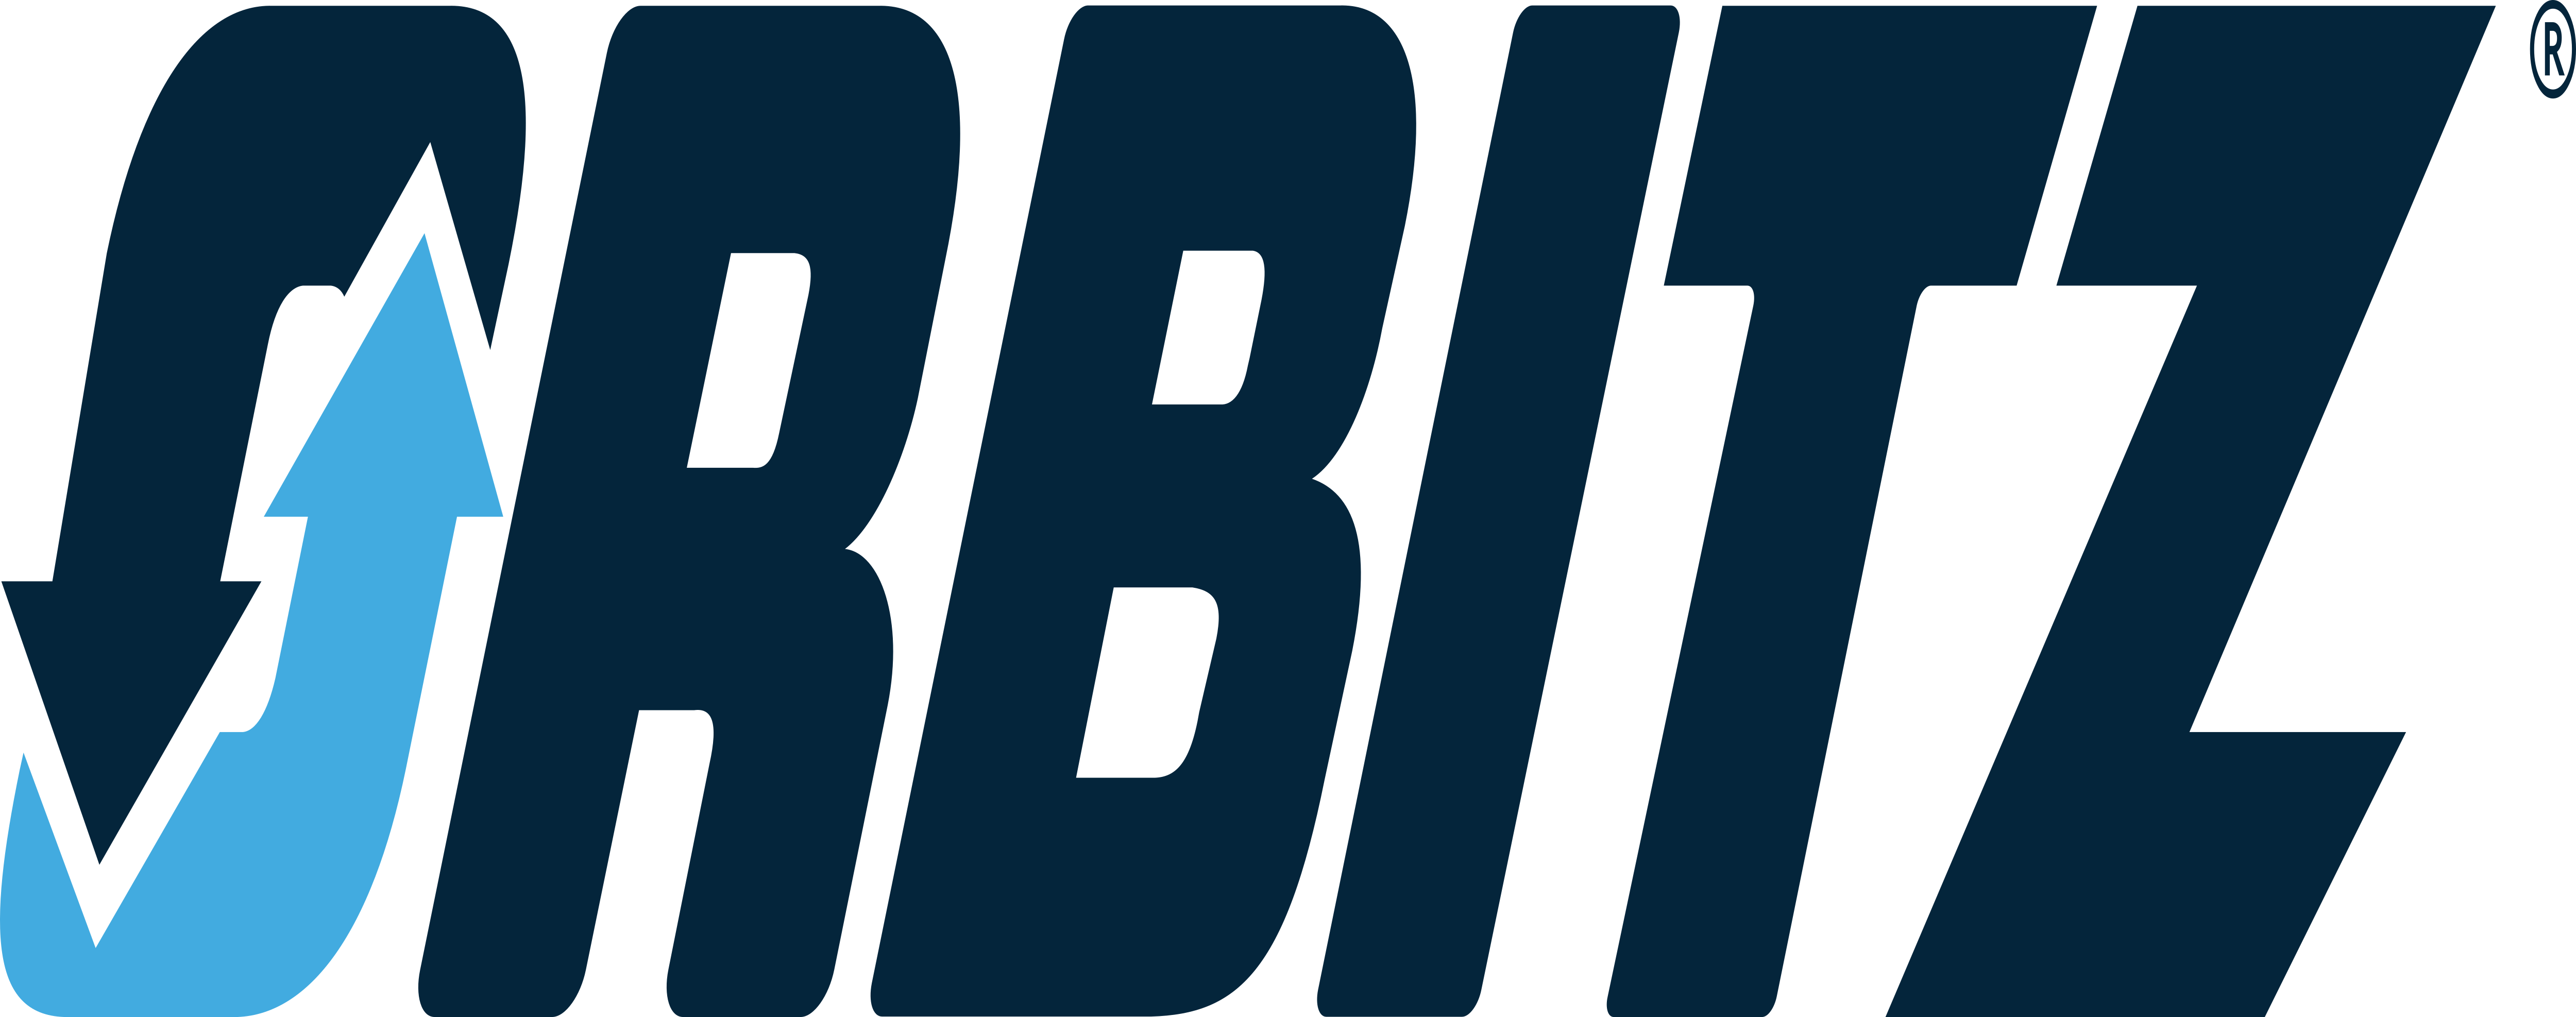 Orbitz.com Logo - Orbitz Travel – Logos Download